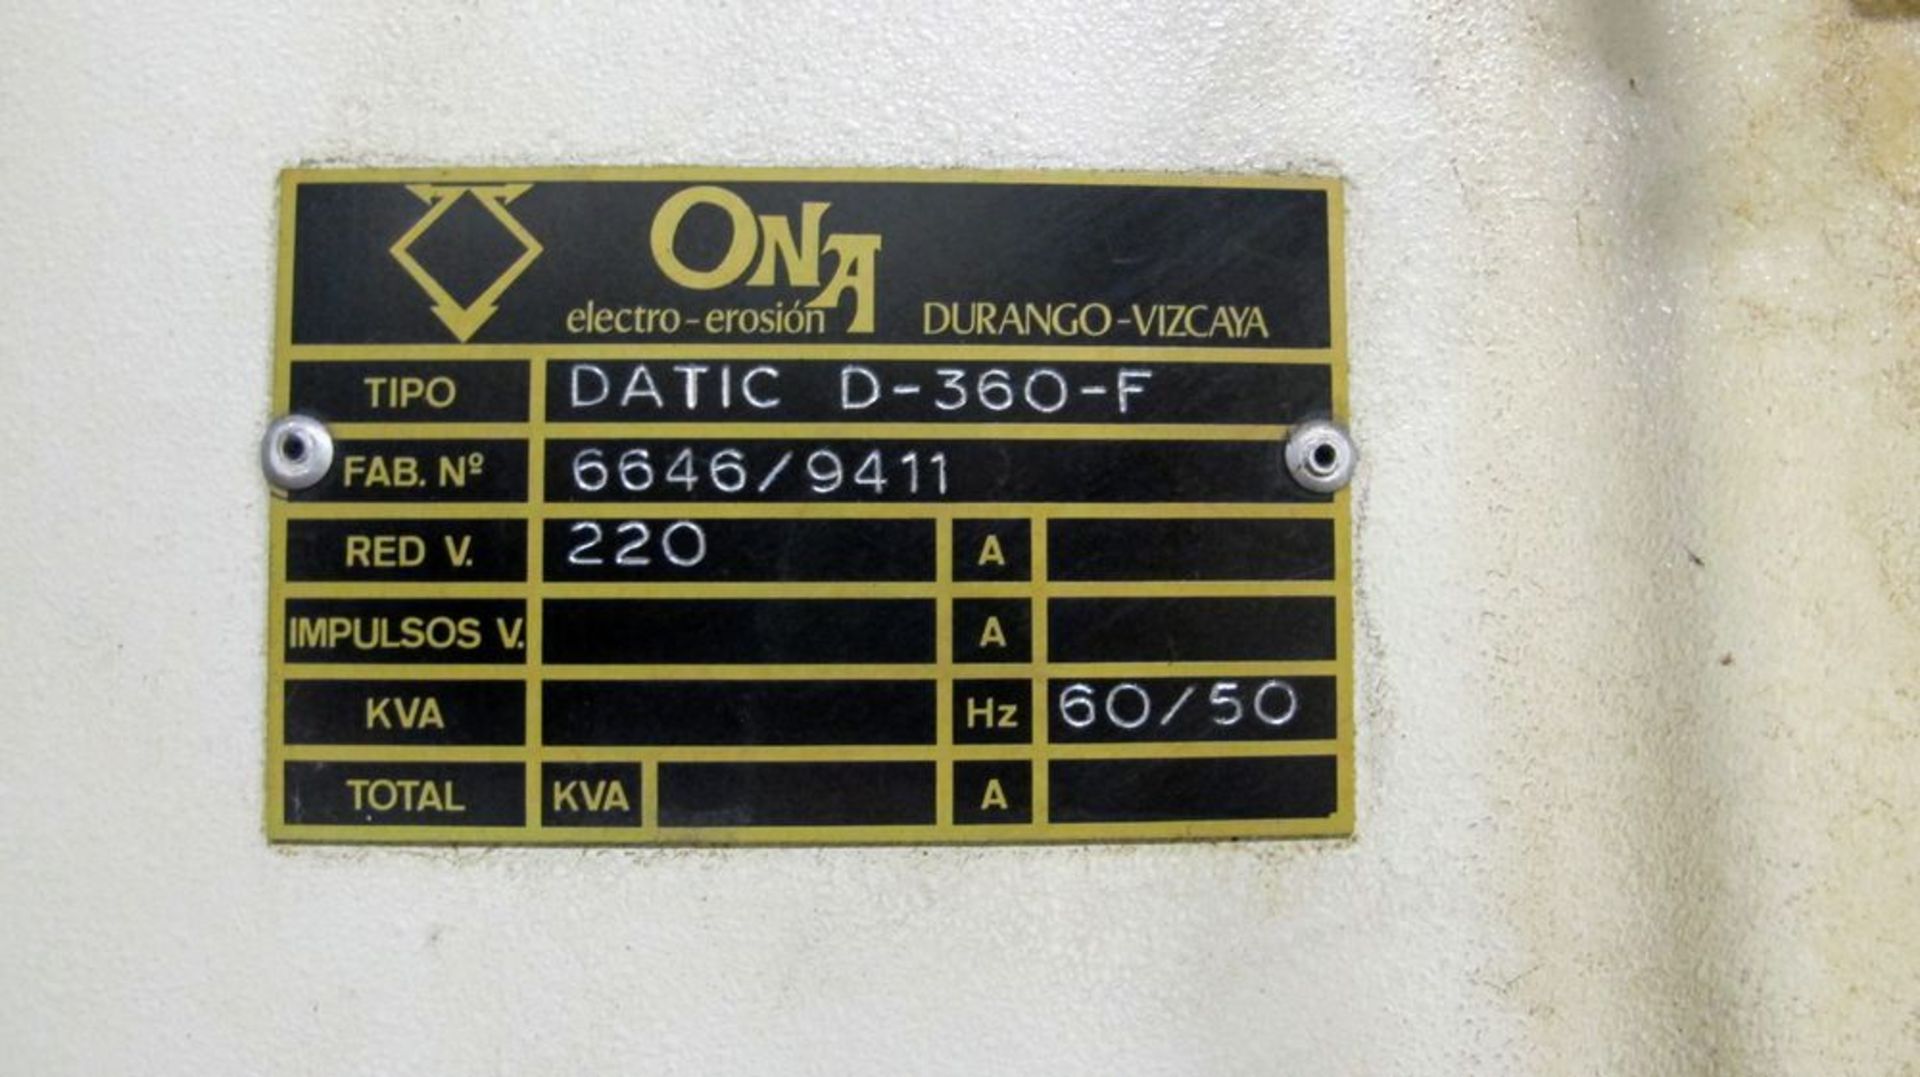 ONA Datic D-360-F Sinker EDM, Datic F60 Control, 16” x 24” Table, s/n 6646/9411 w/ Setup Clamps - Image 10 of 12